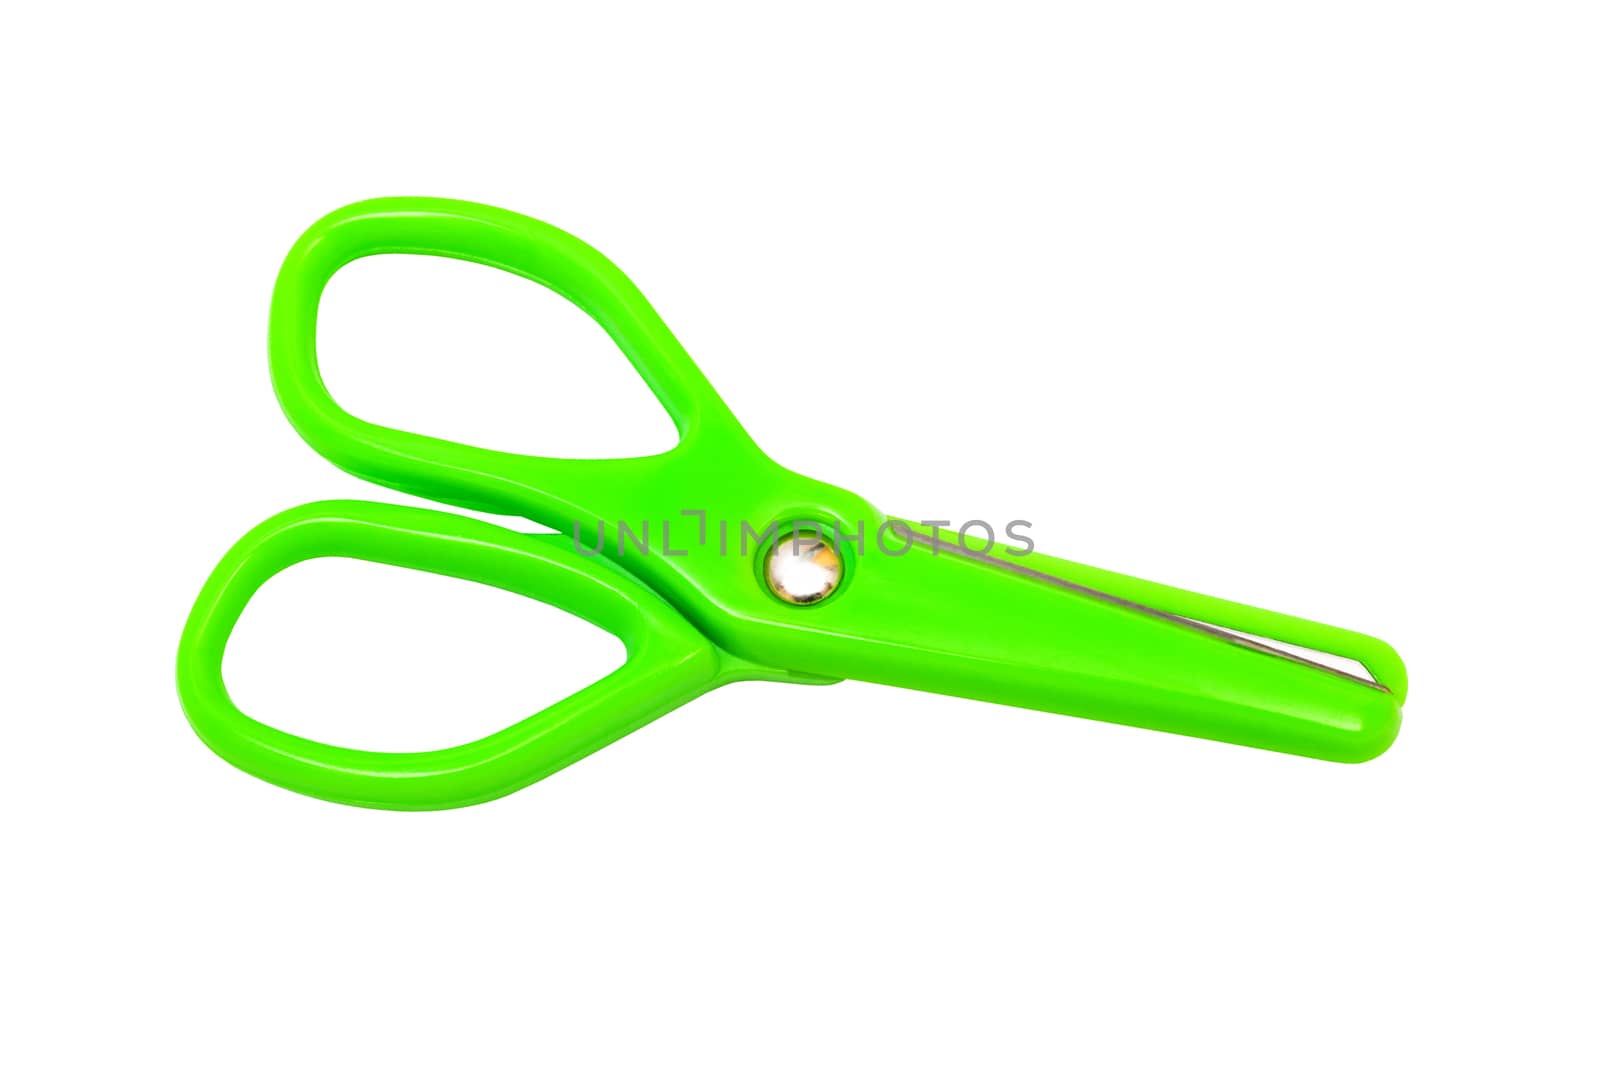 Modern green scissors on a white background